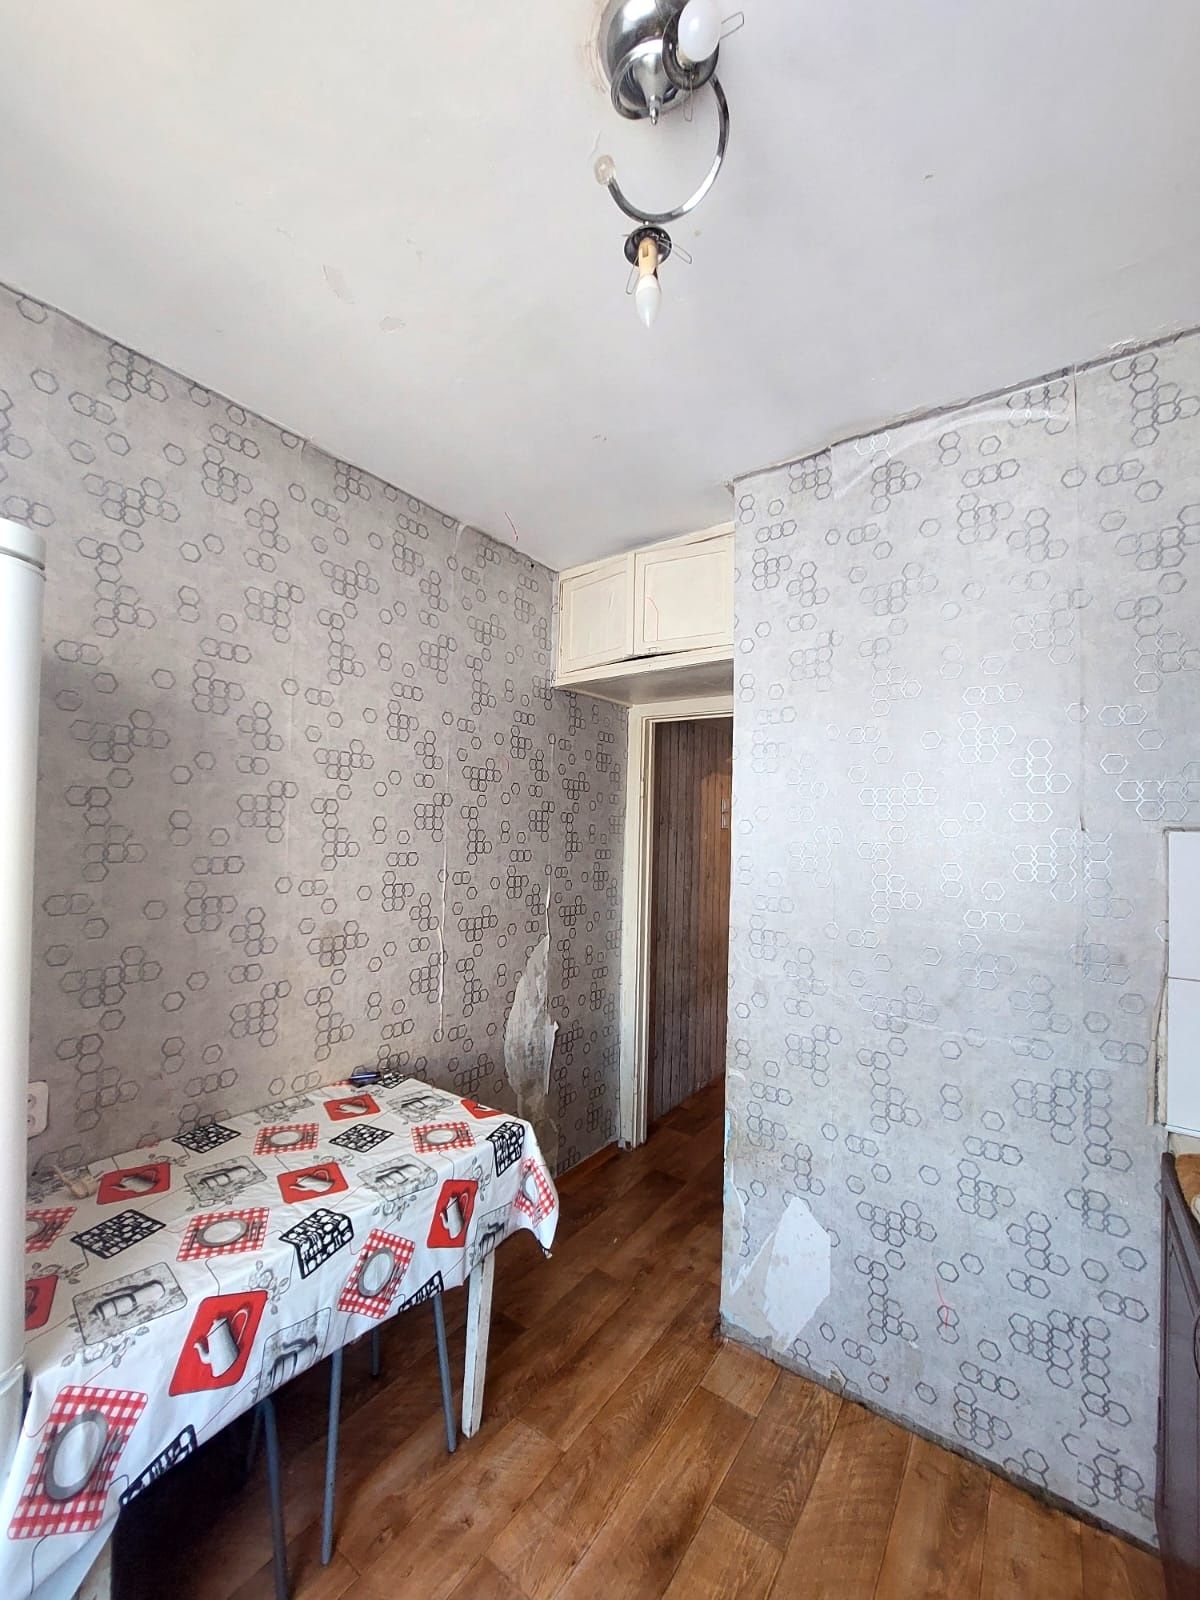 Продается 2х-комнатная квартира в районе рынка Караван (С. Тюленина)